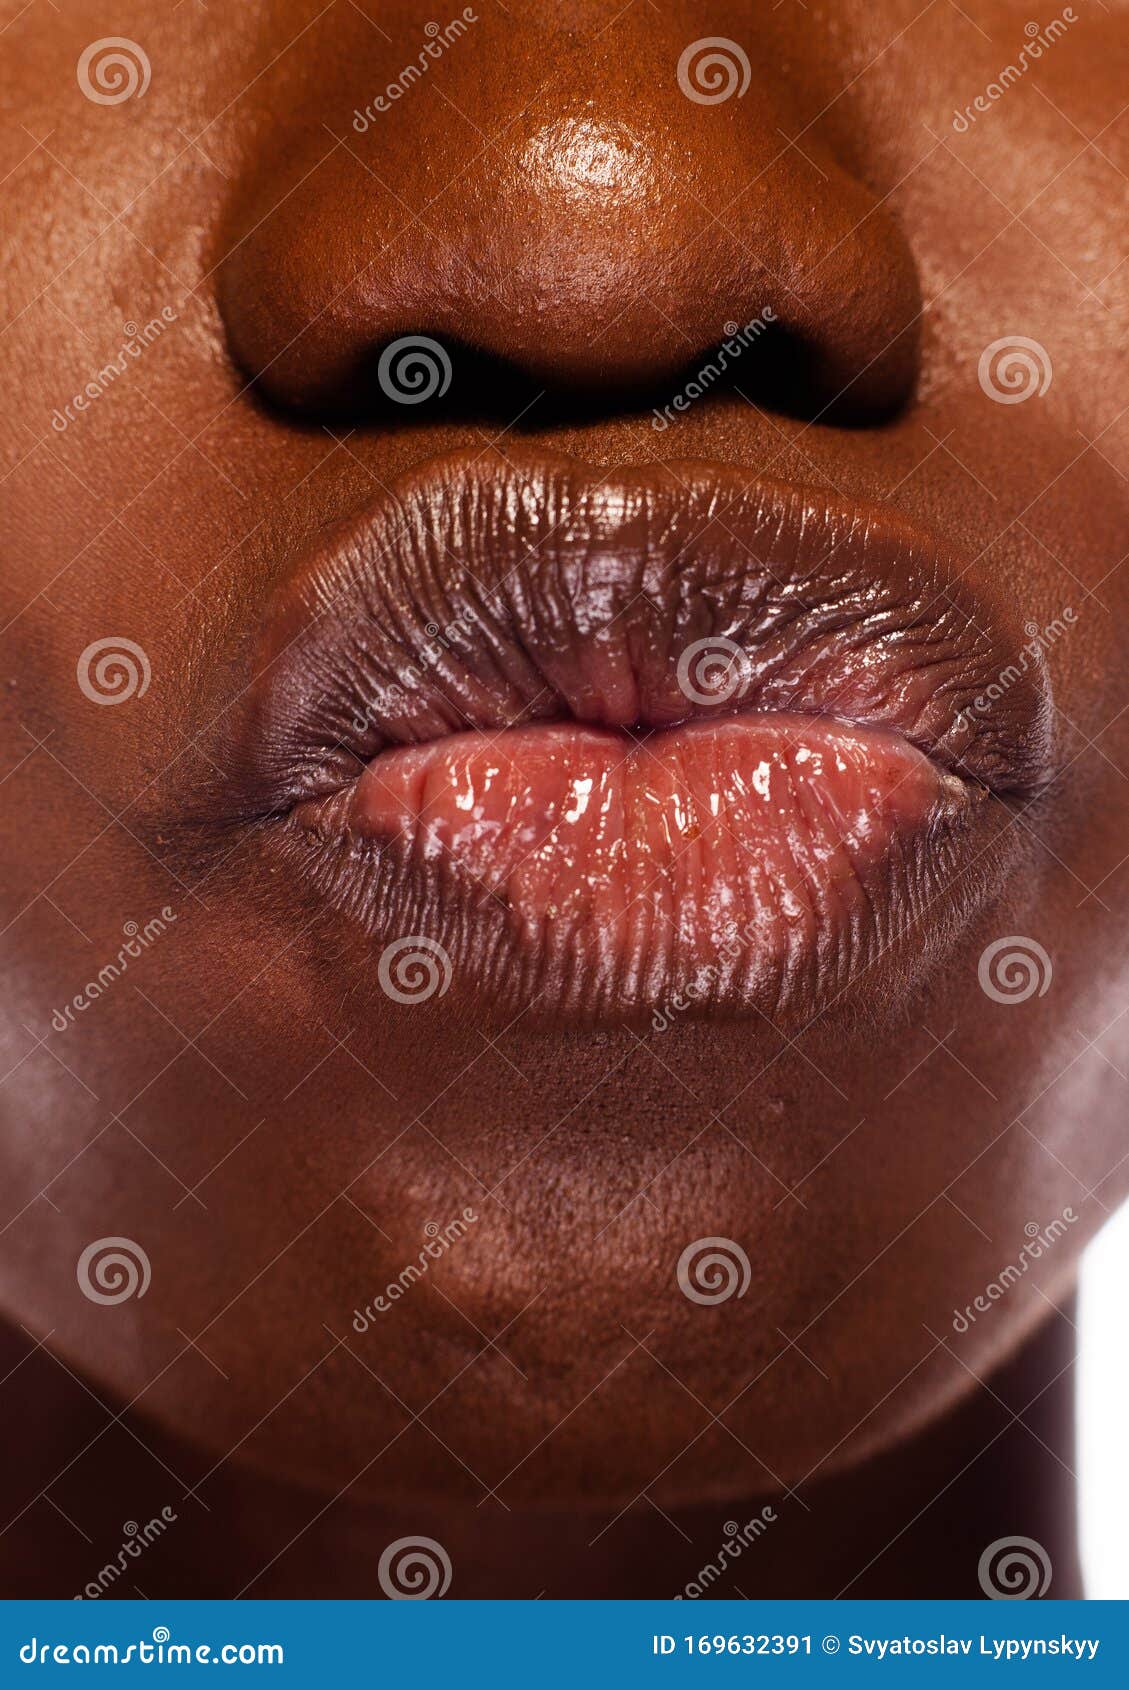 danny sales recommends Hot Black Women Kissing